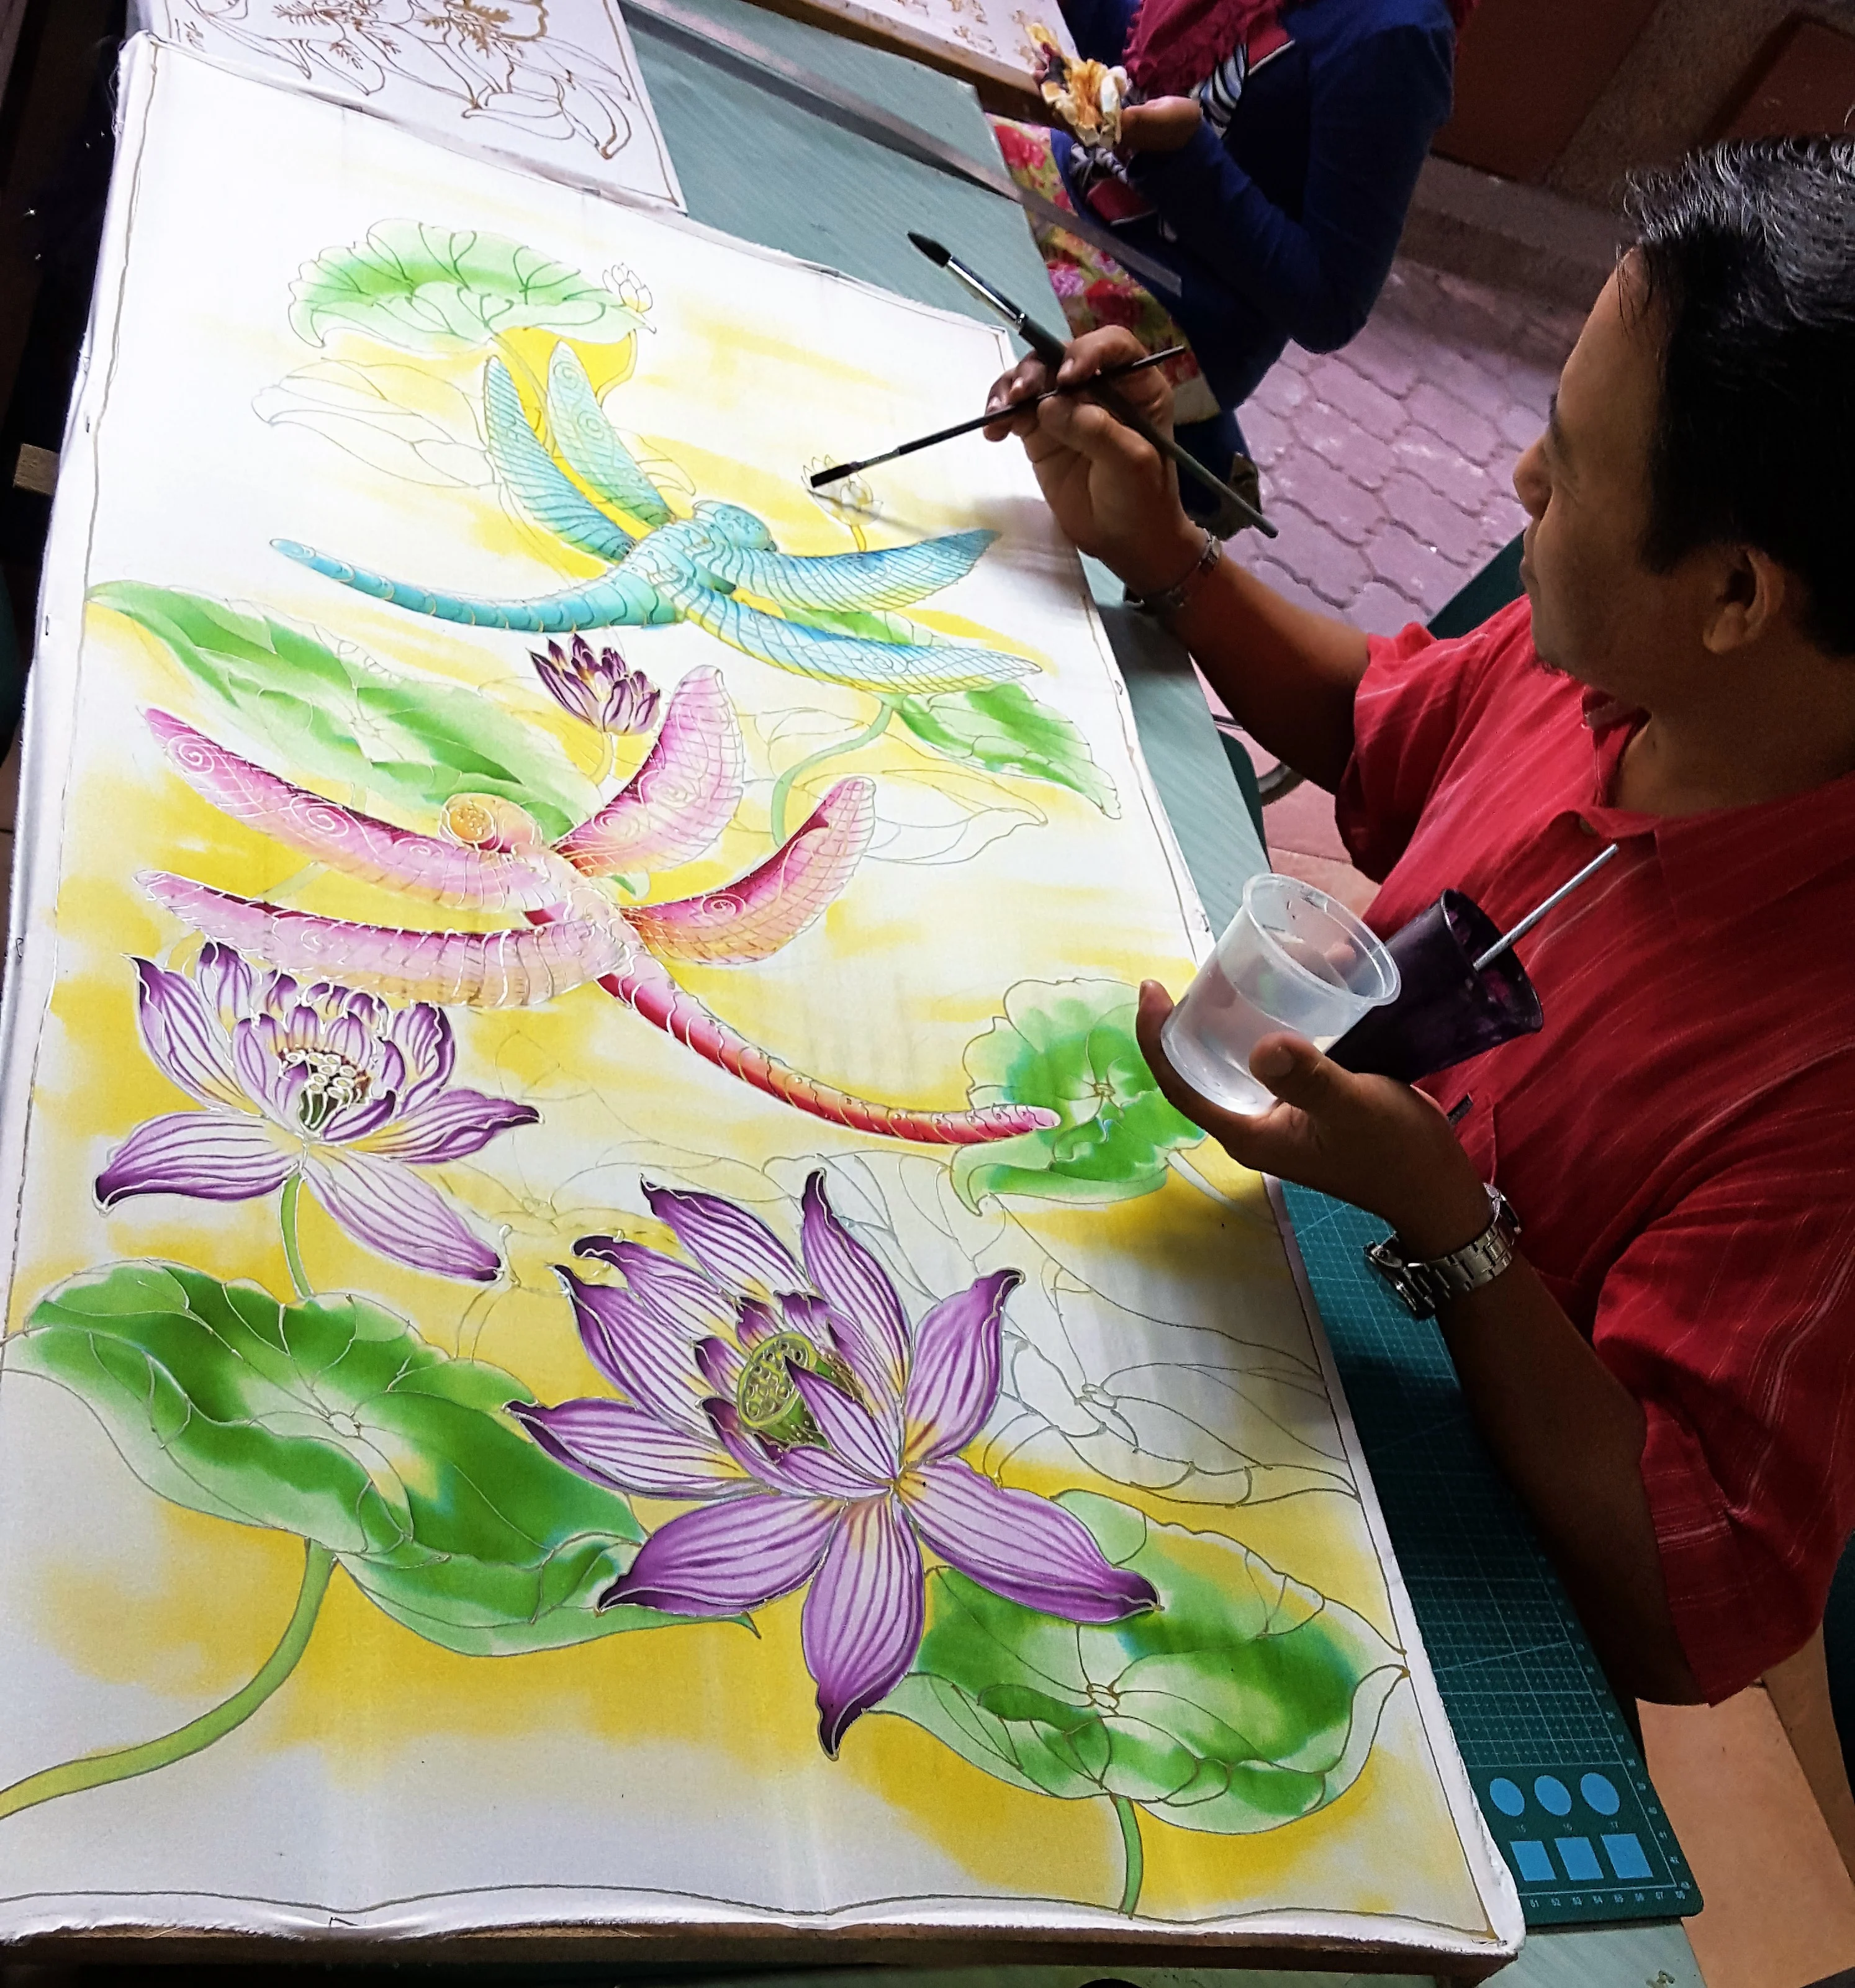 Lazim Ismail, Batik artist who designed the Fighting Fish design.